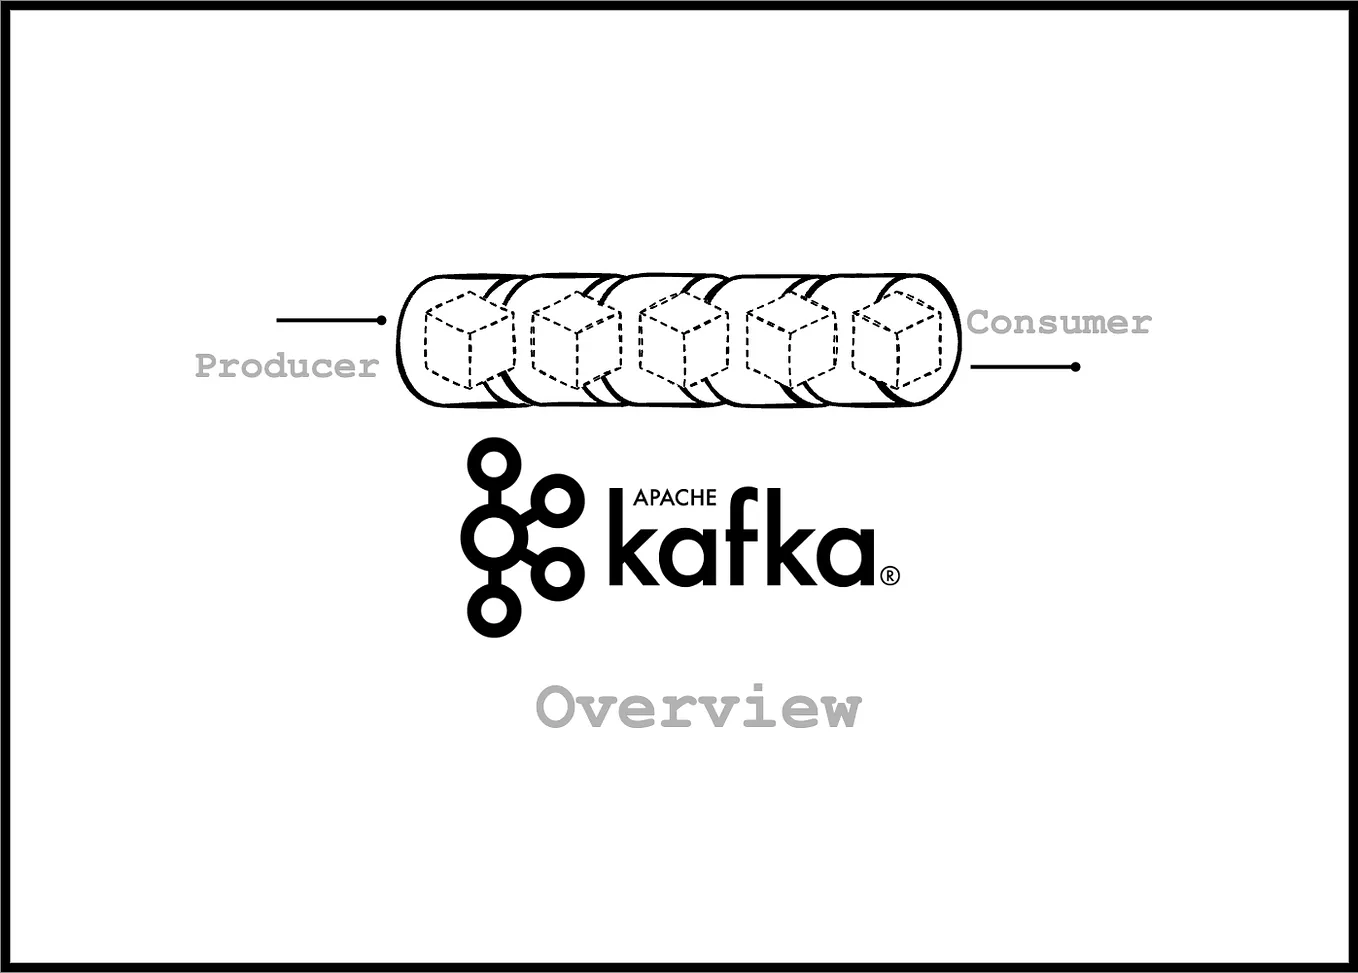 Apache Kafka — Overview